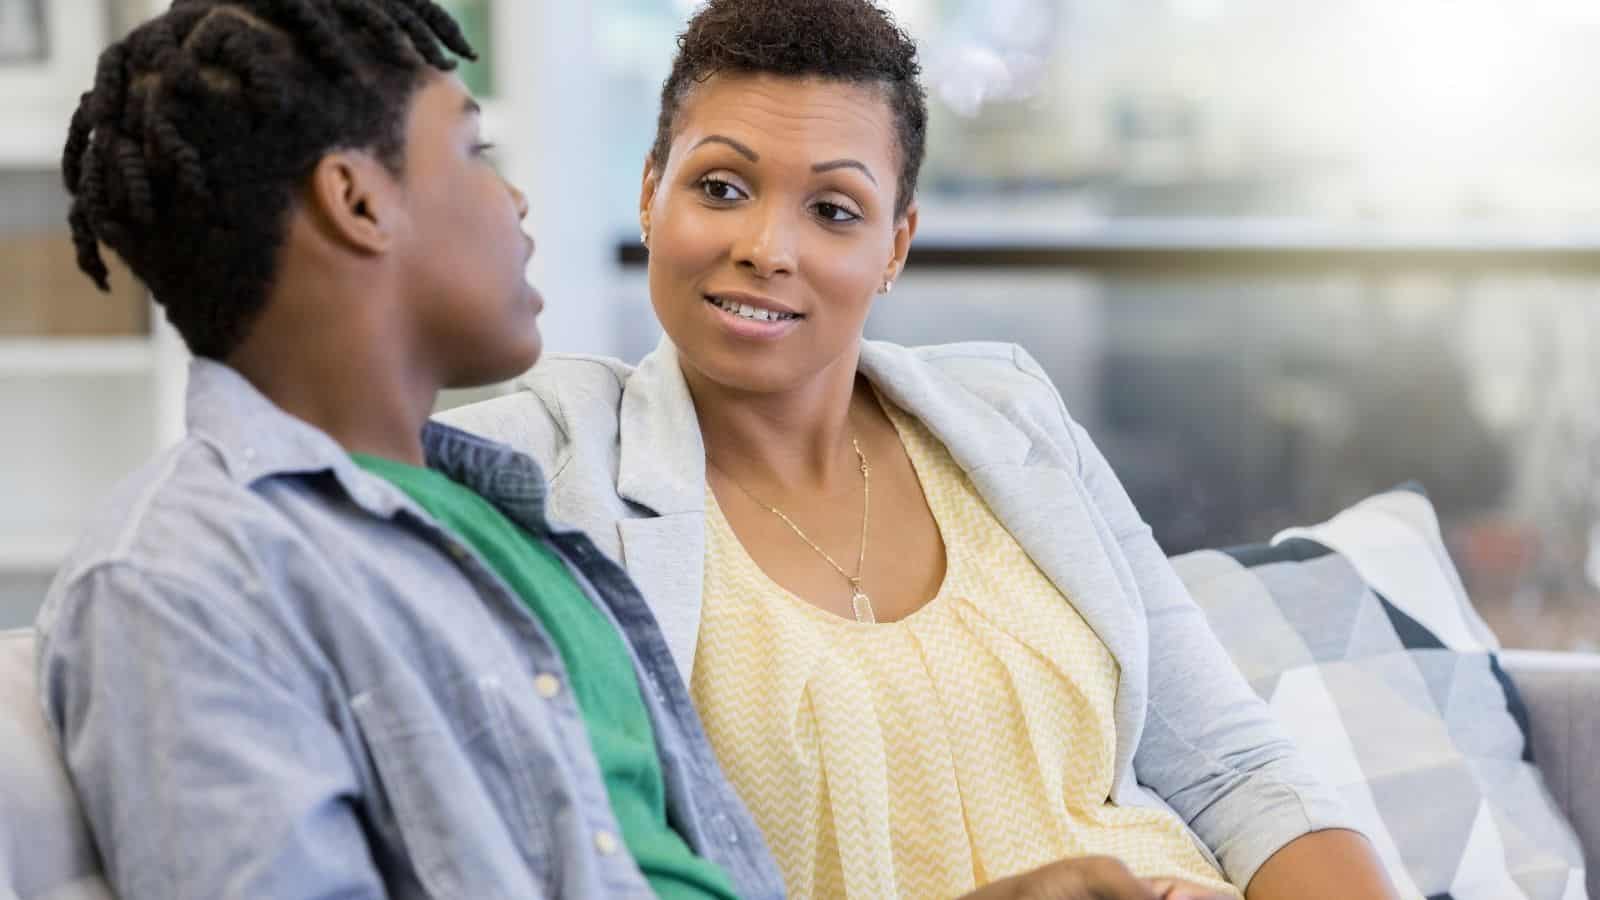 10 ways you can improve parent-teen relationships